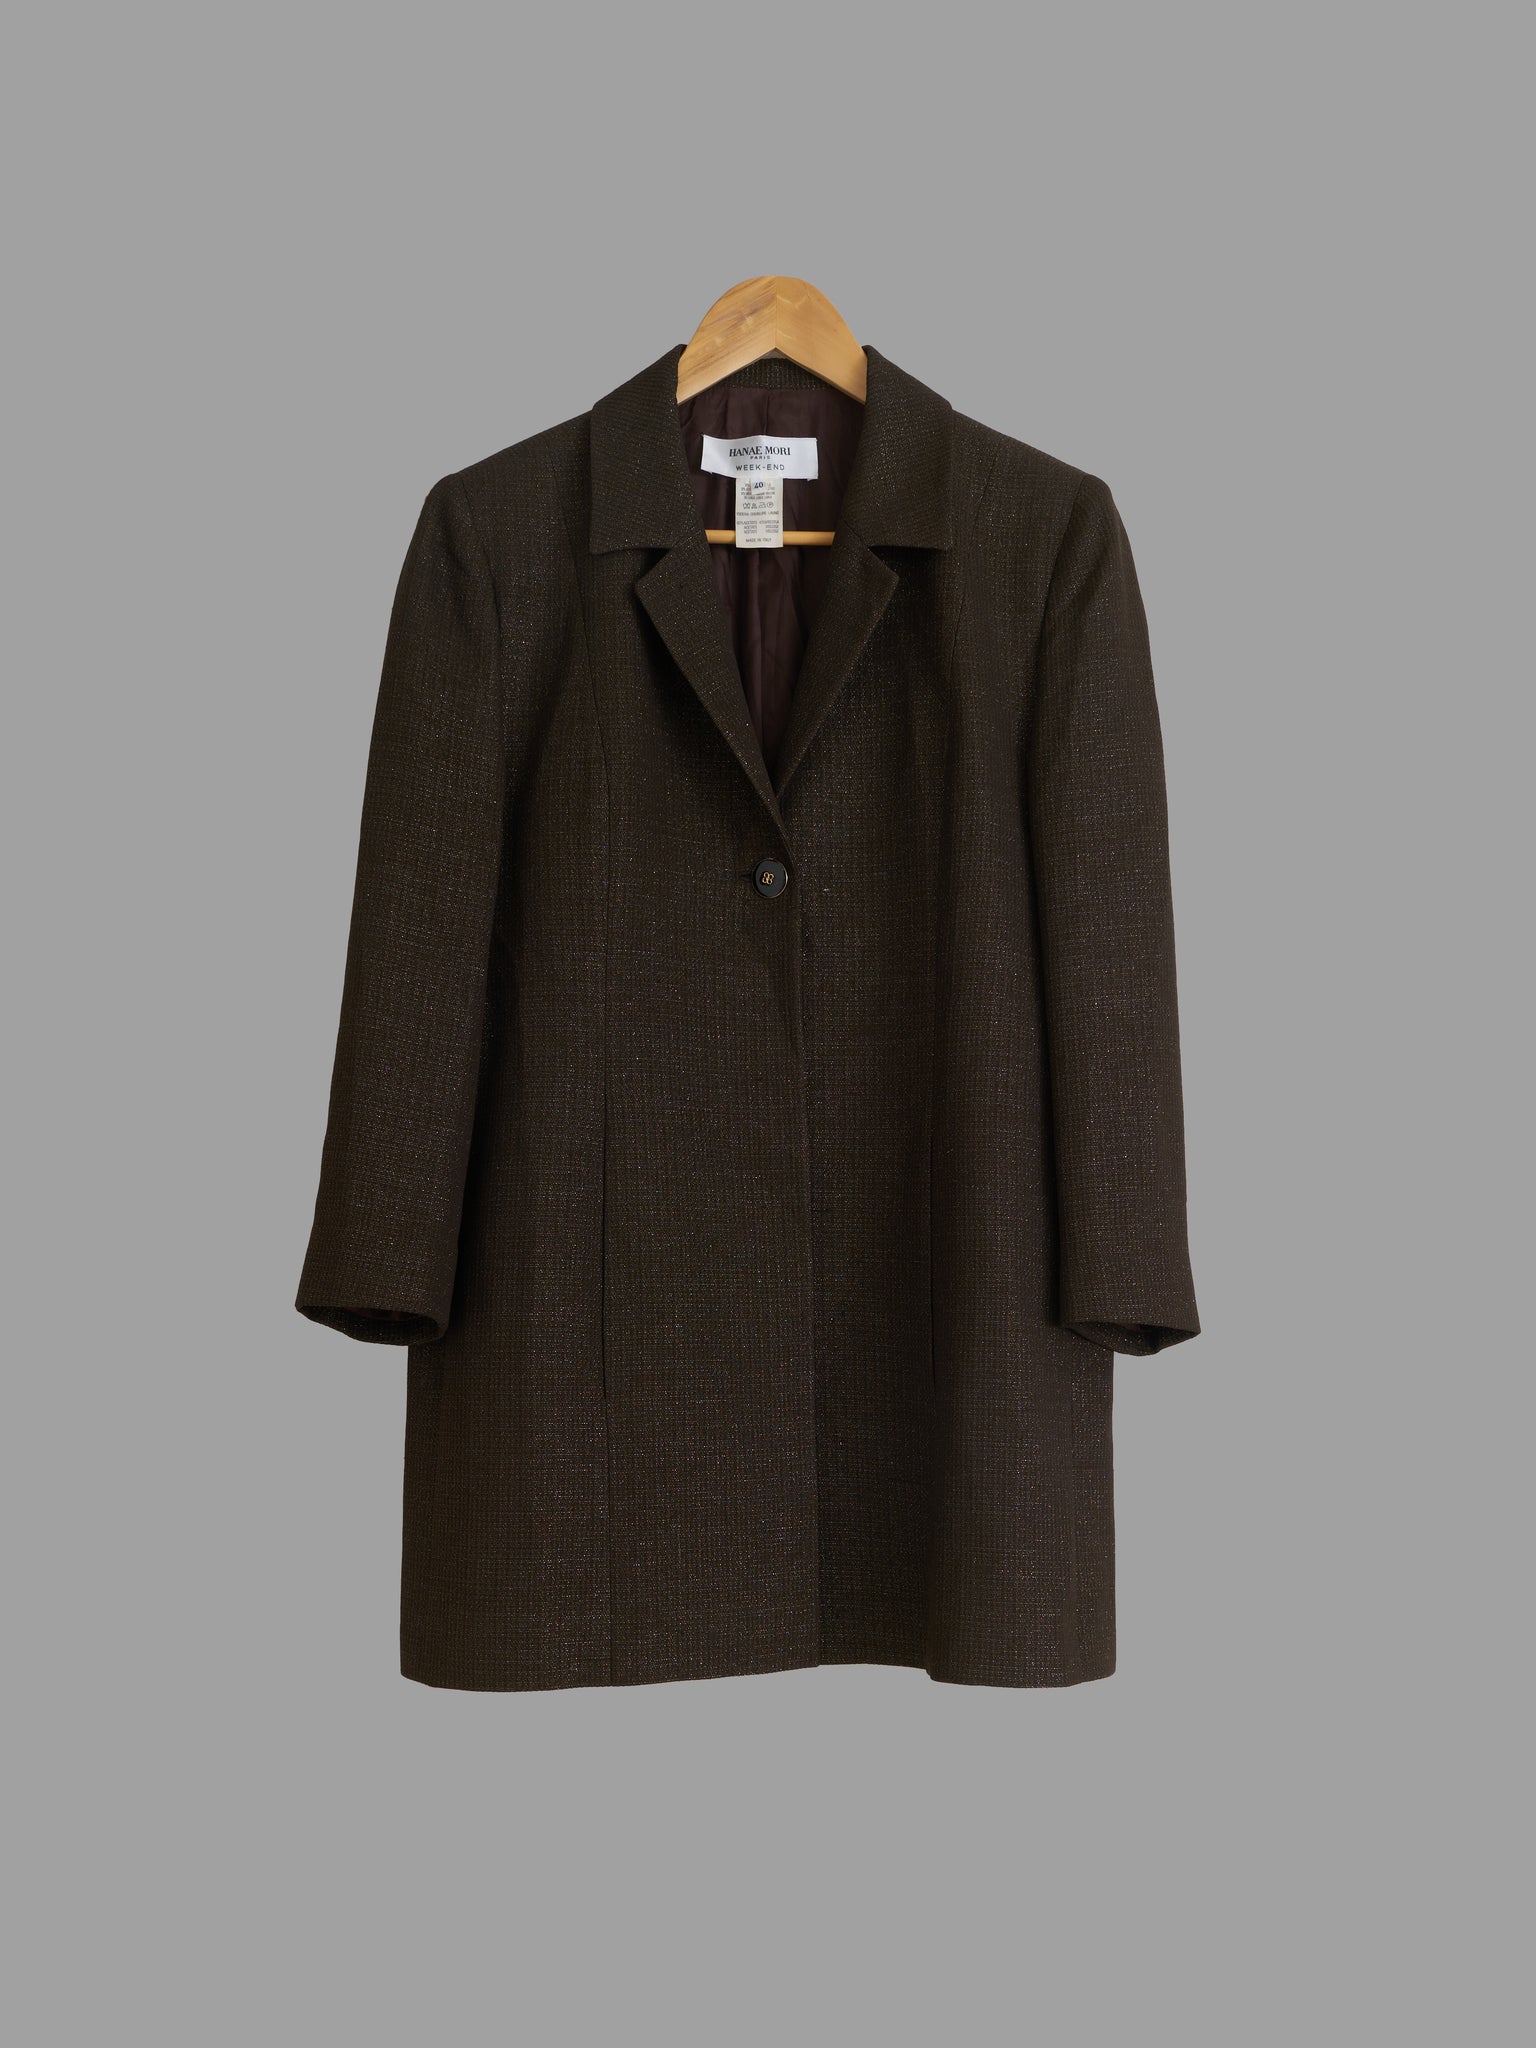 Hanae Mori Week-End brown wool blend single button coat - womens size 40